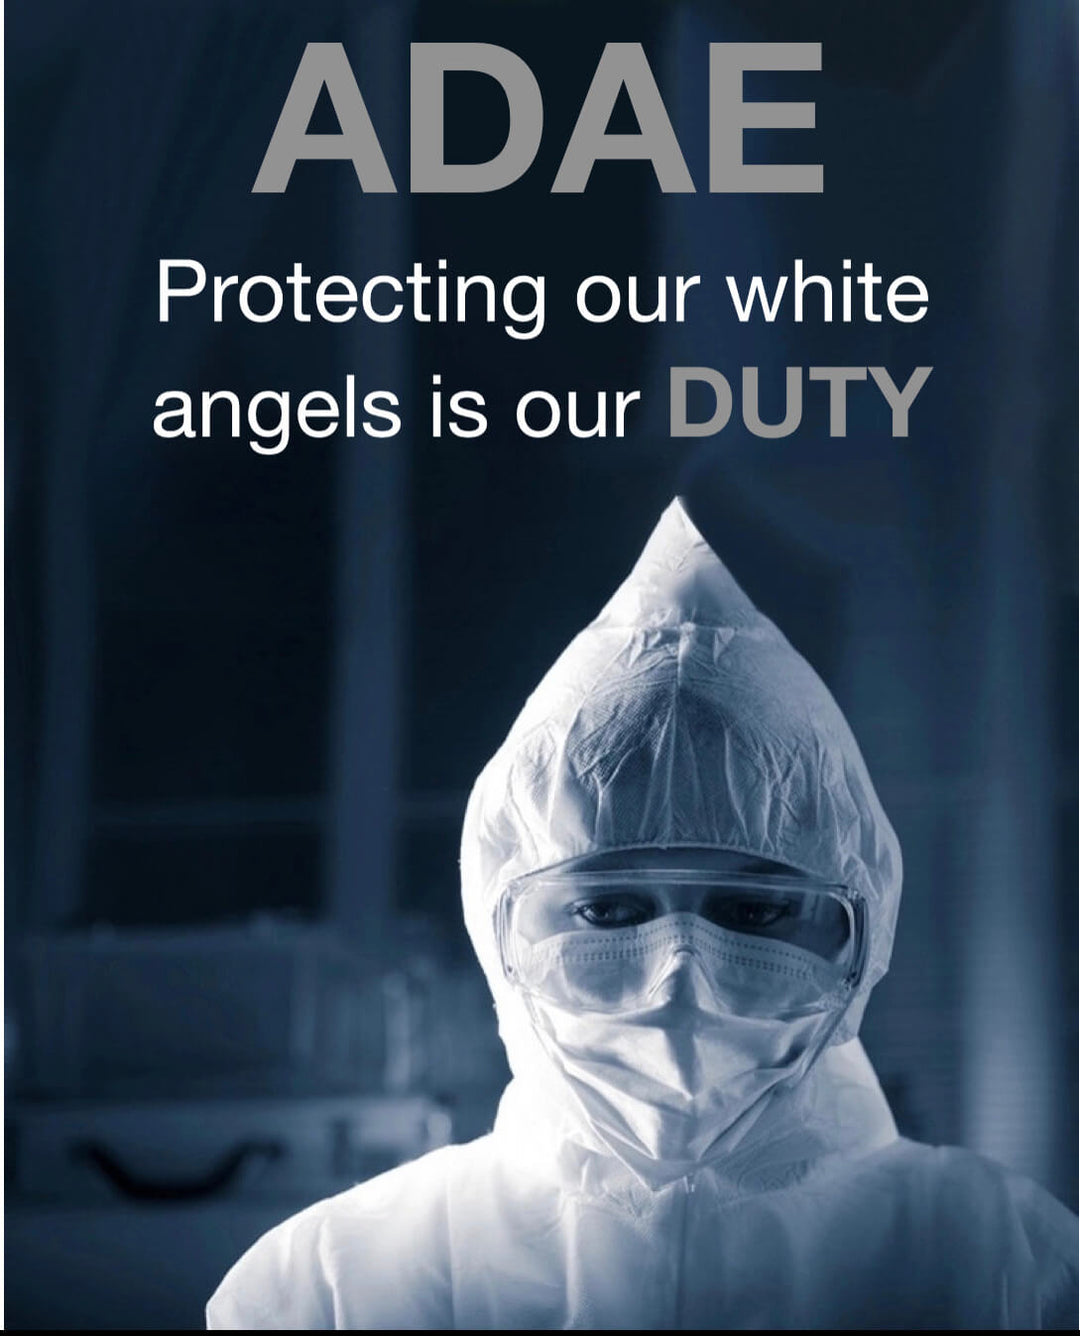 ADAE UV sterilization cabin - ADAE Dental Online Store